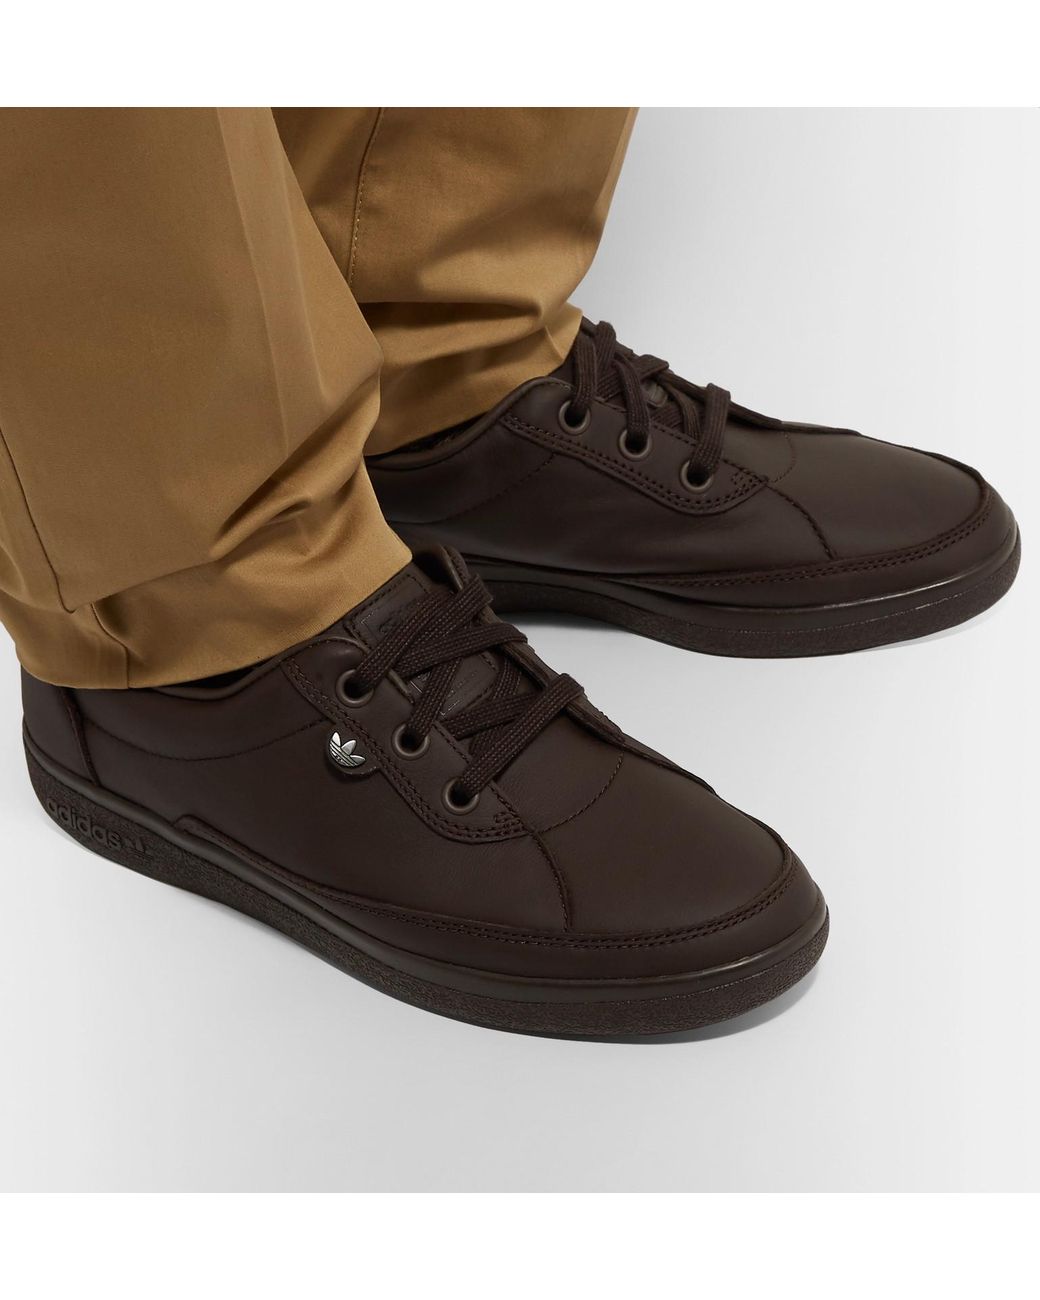 adidas Originals Hoddlesden Spzl Leather Sneakers in Brown for Men | Lyst UK